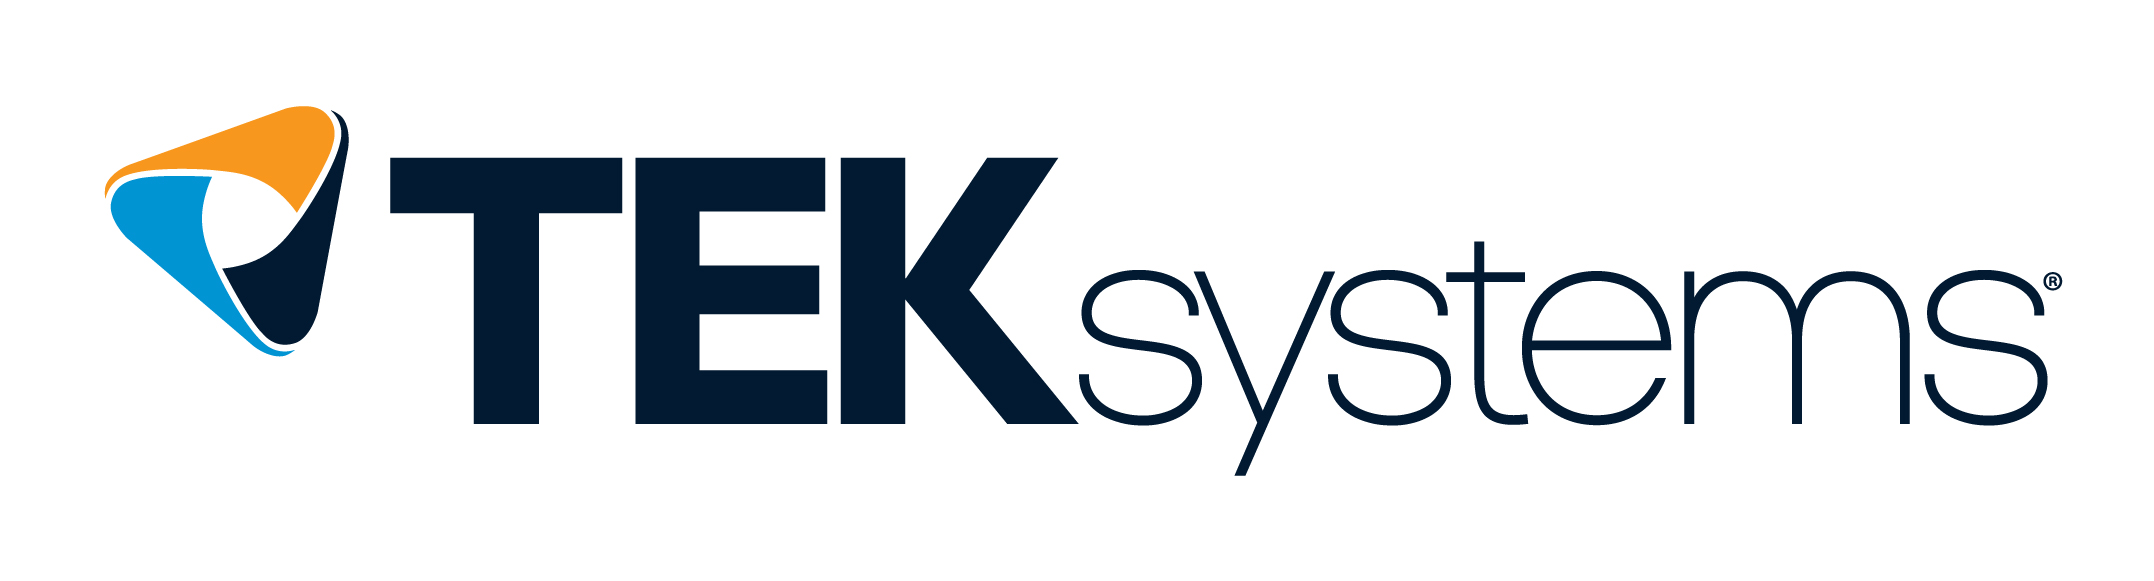 TEK systems